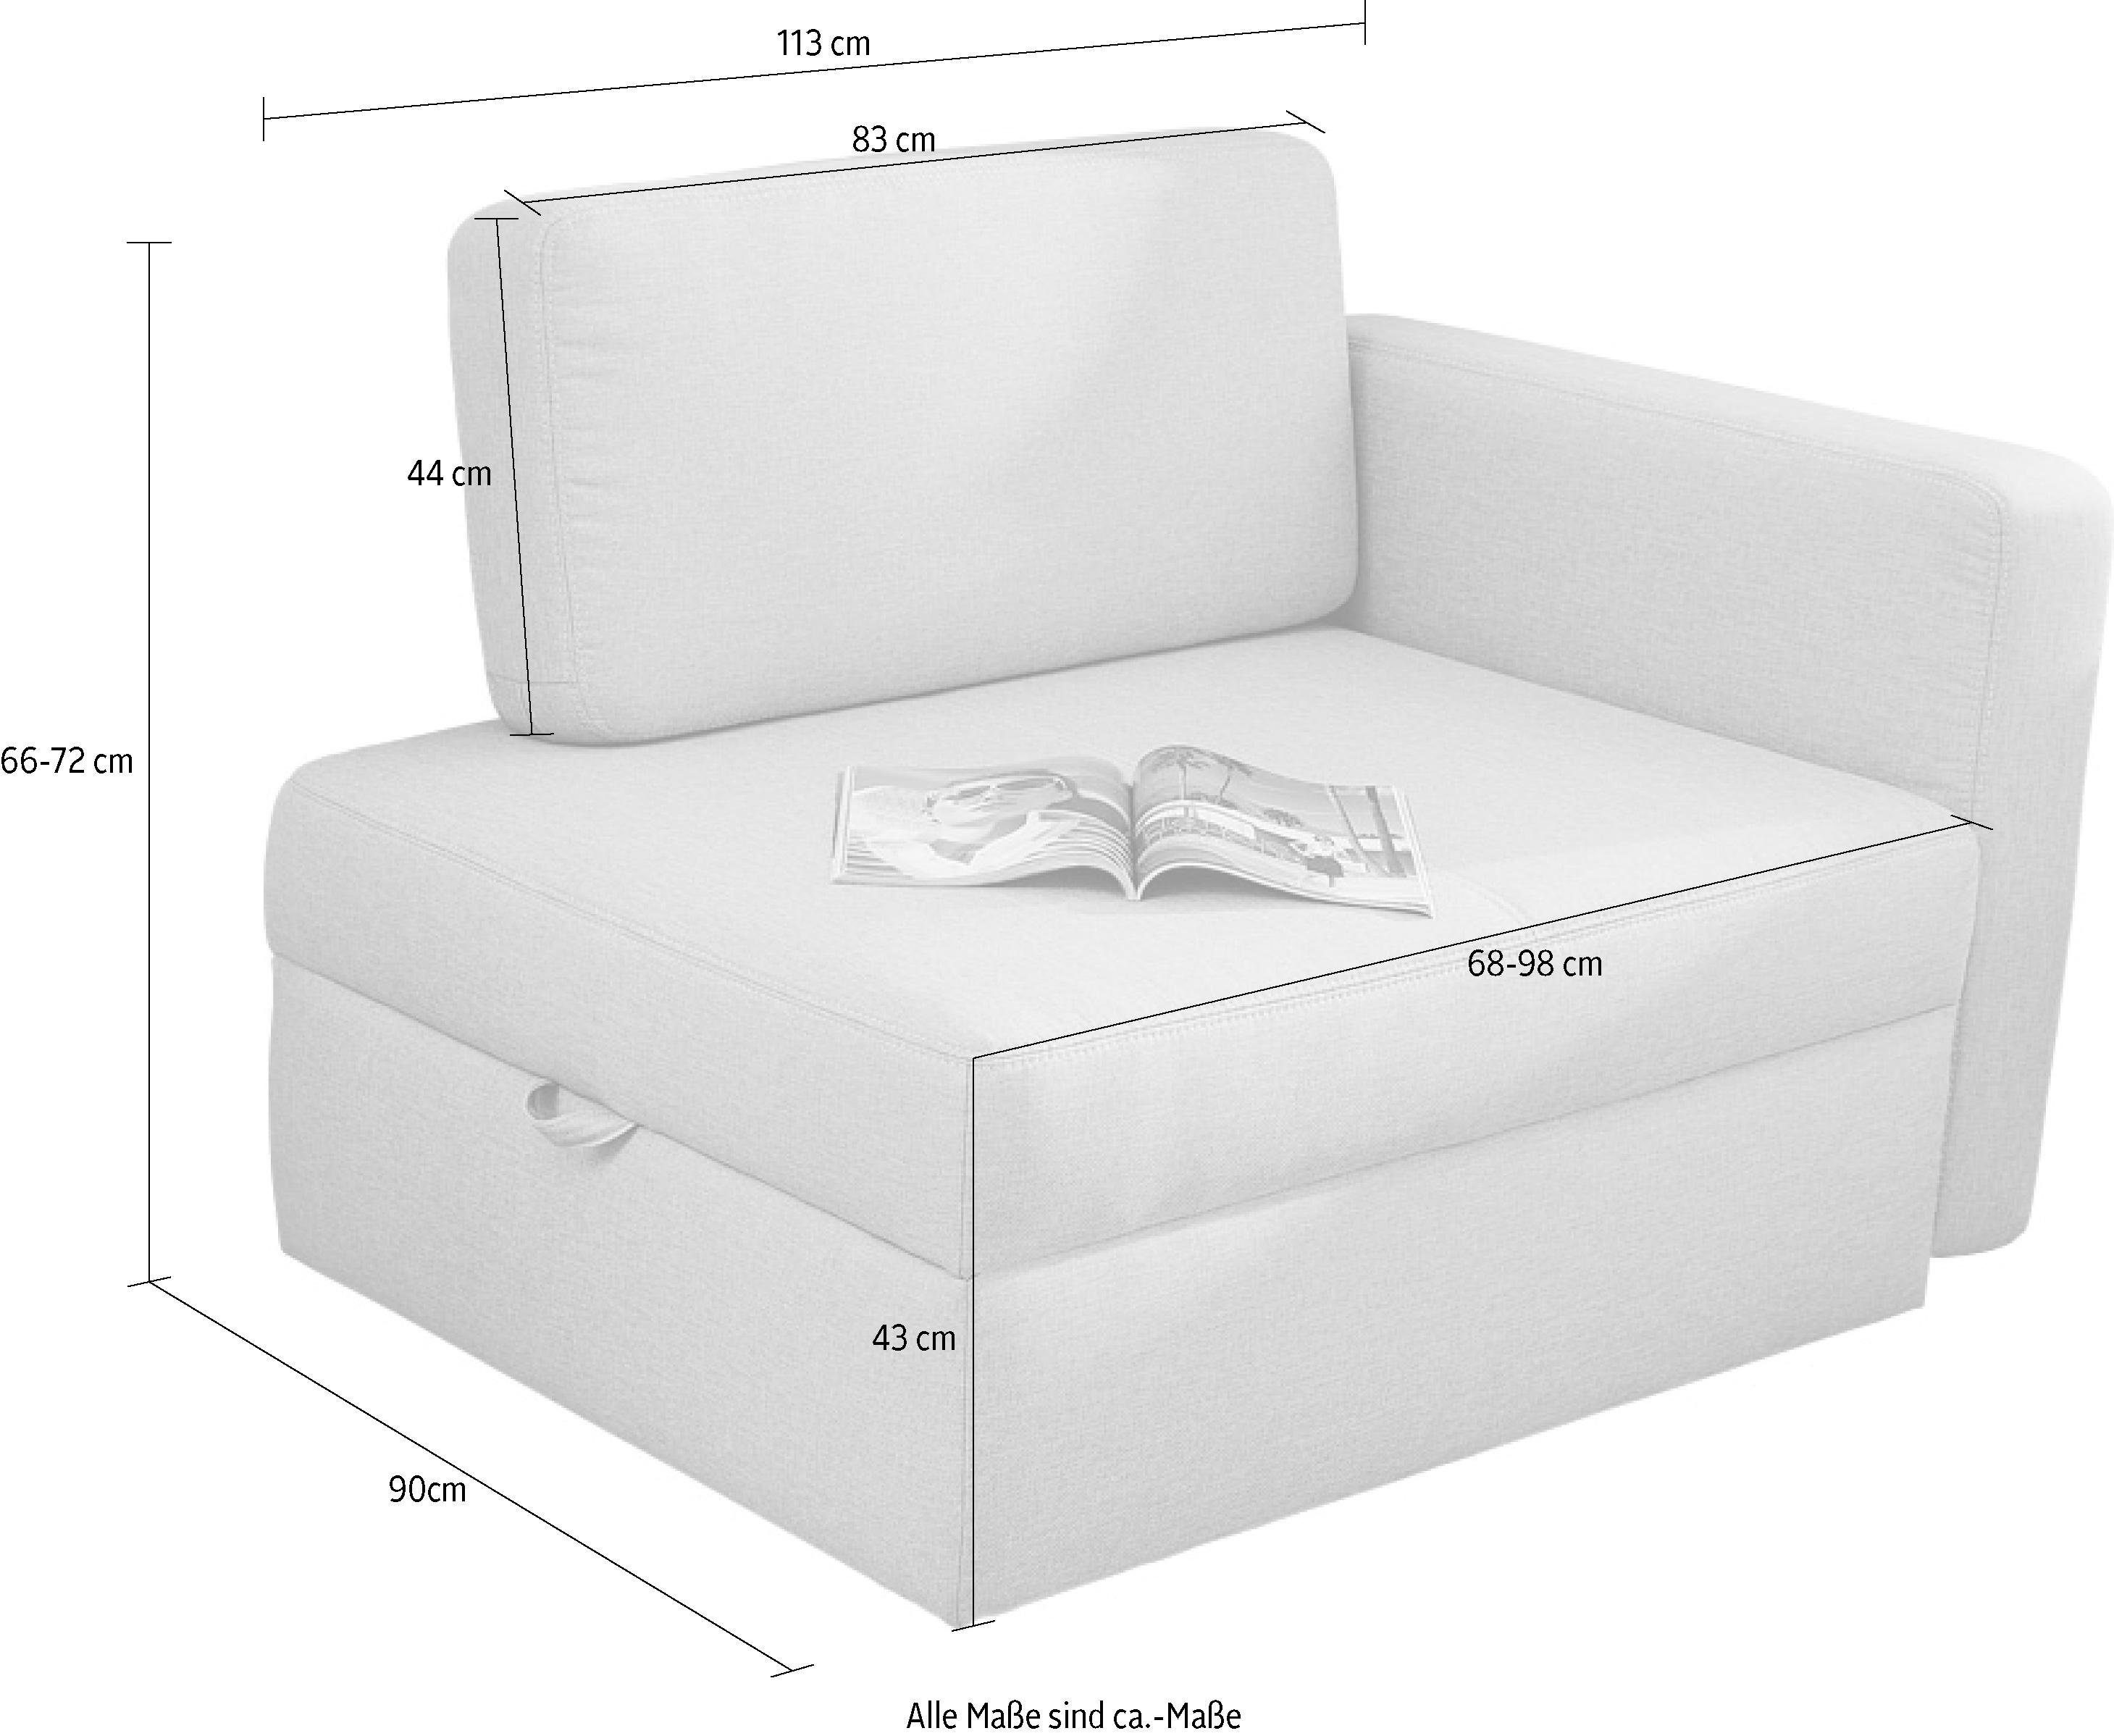 Jockenhöfer Gruppe Sessel ein Liegefläche platzsparend, verwandelbar Gästebett, cm hellgrau Youngster, in 84x201